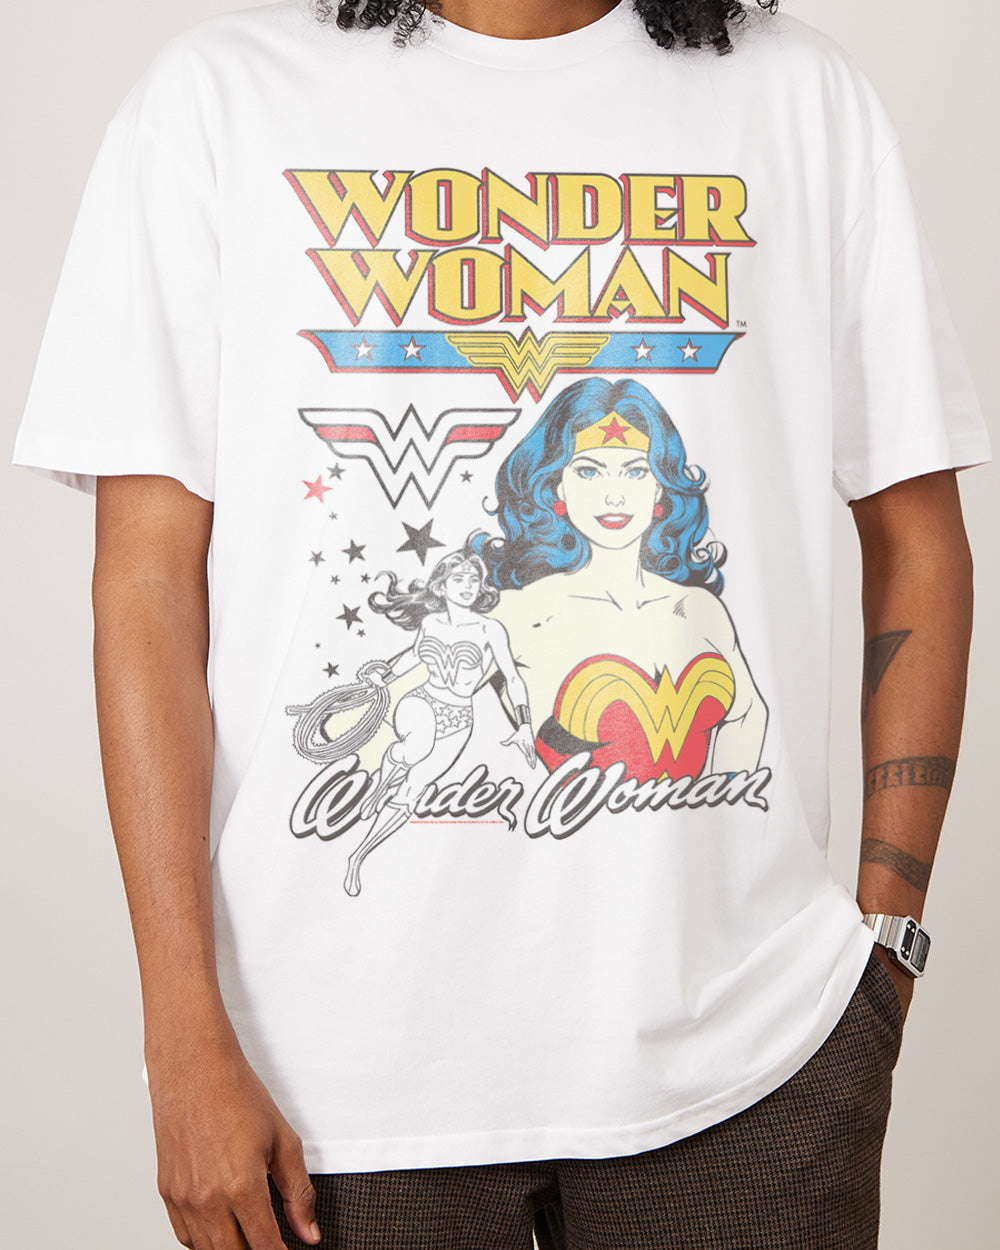 | Official Woman Vintage T-Shirt Merch Threadheads | Wonder DC